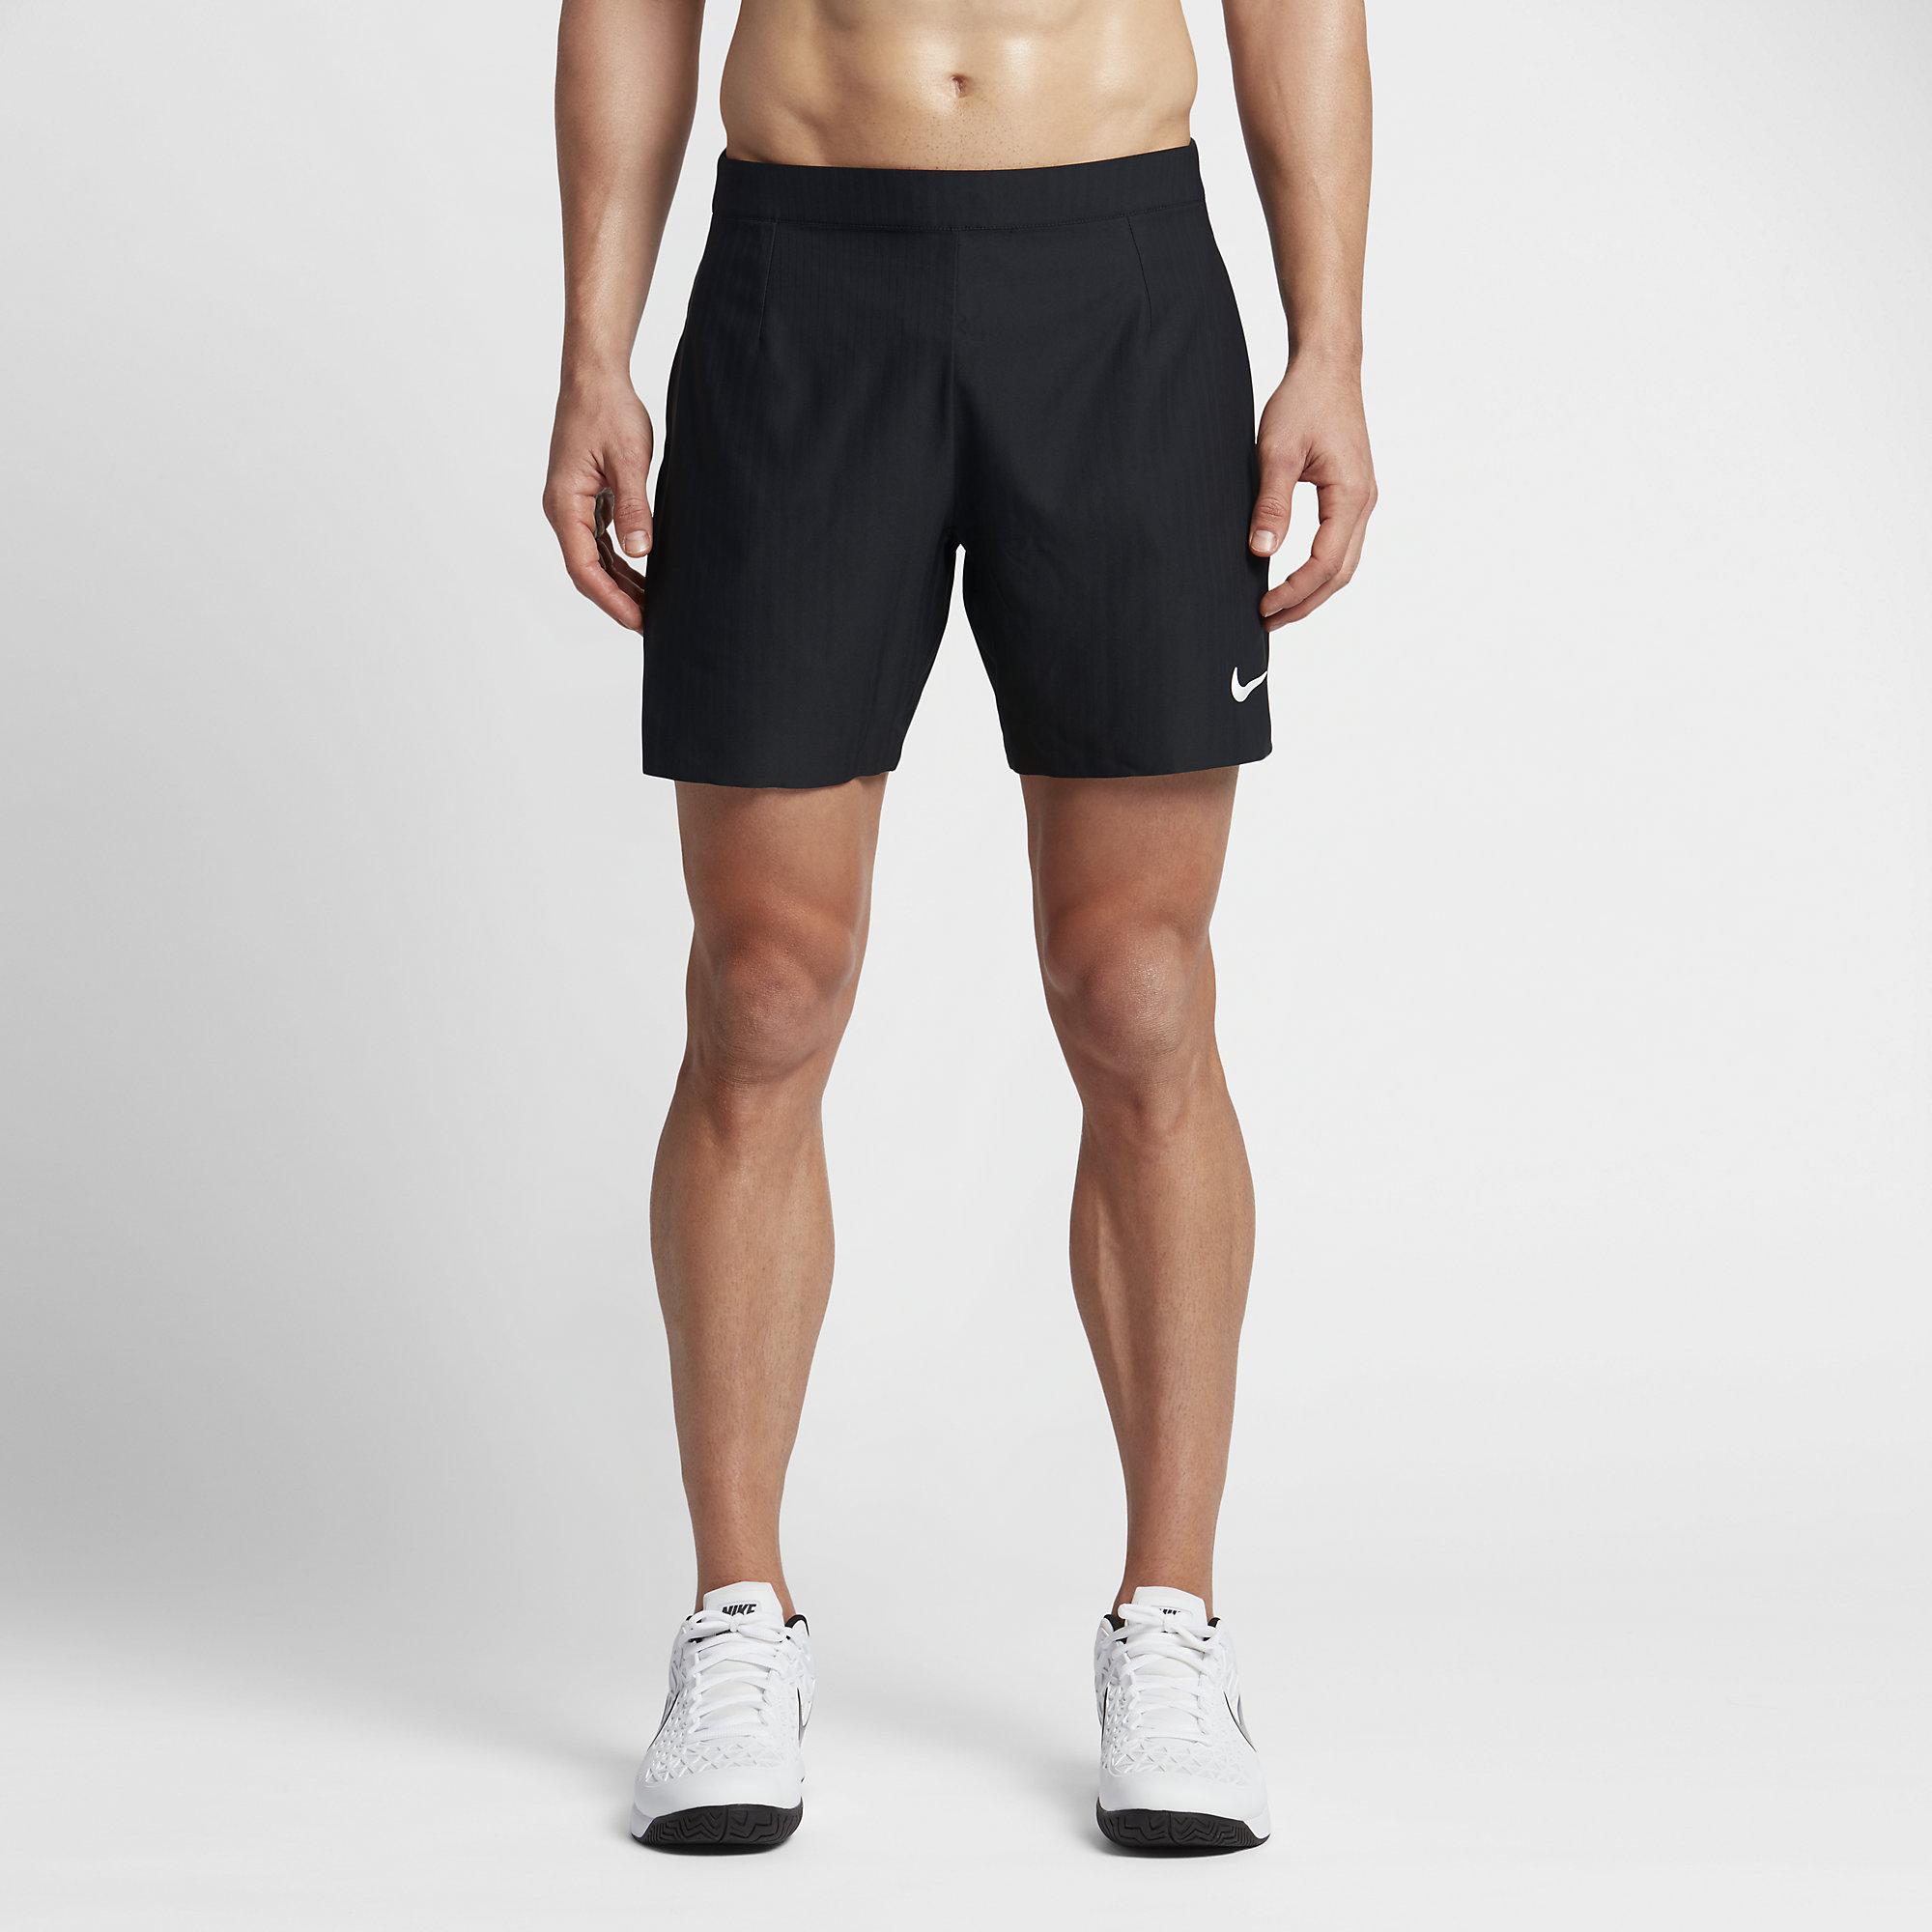 Nike Mens Flex 7 Inch Tennis Shorts - Black - Tennisnuts.com